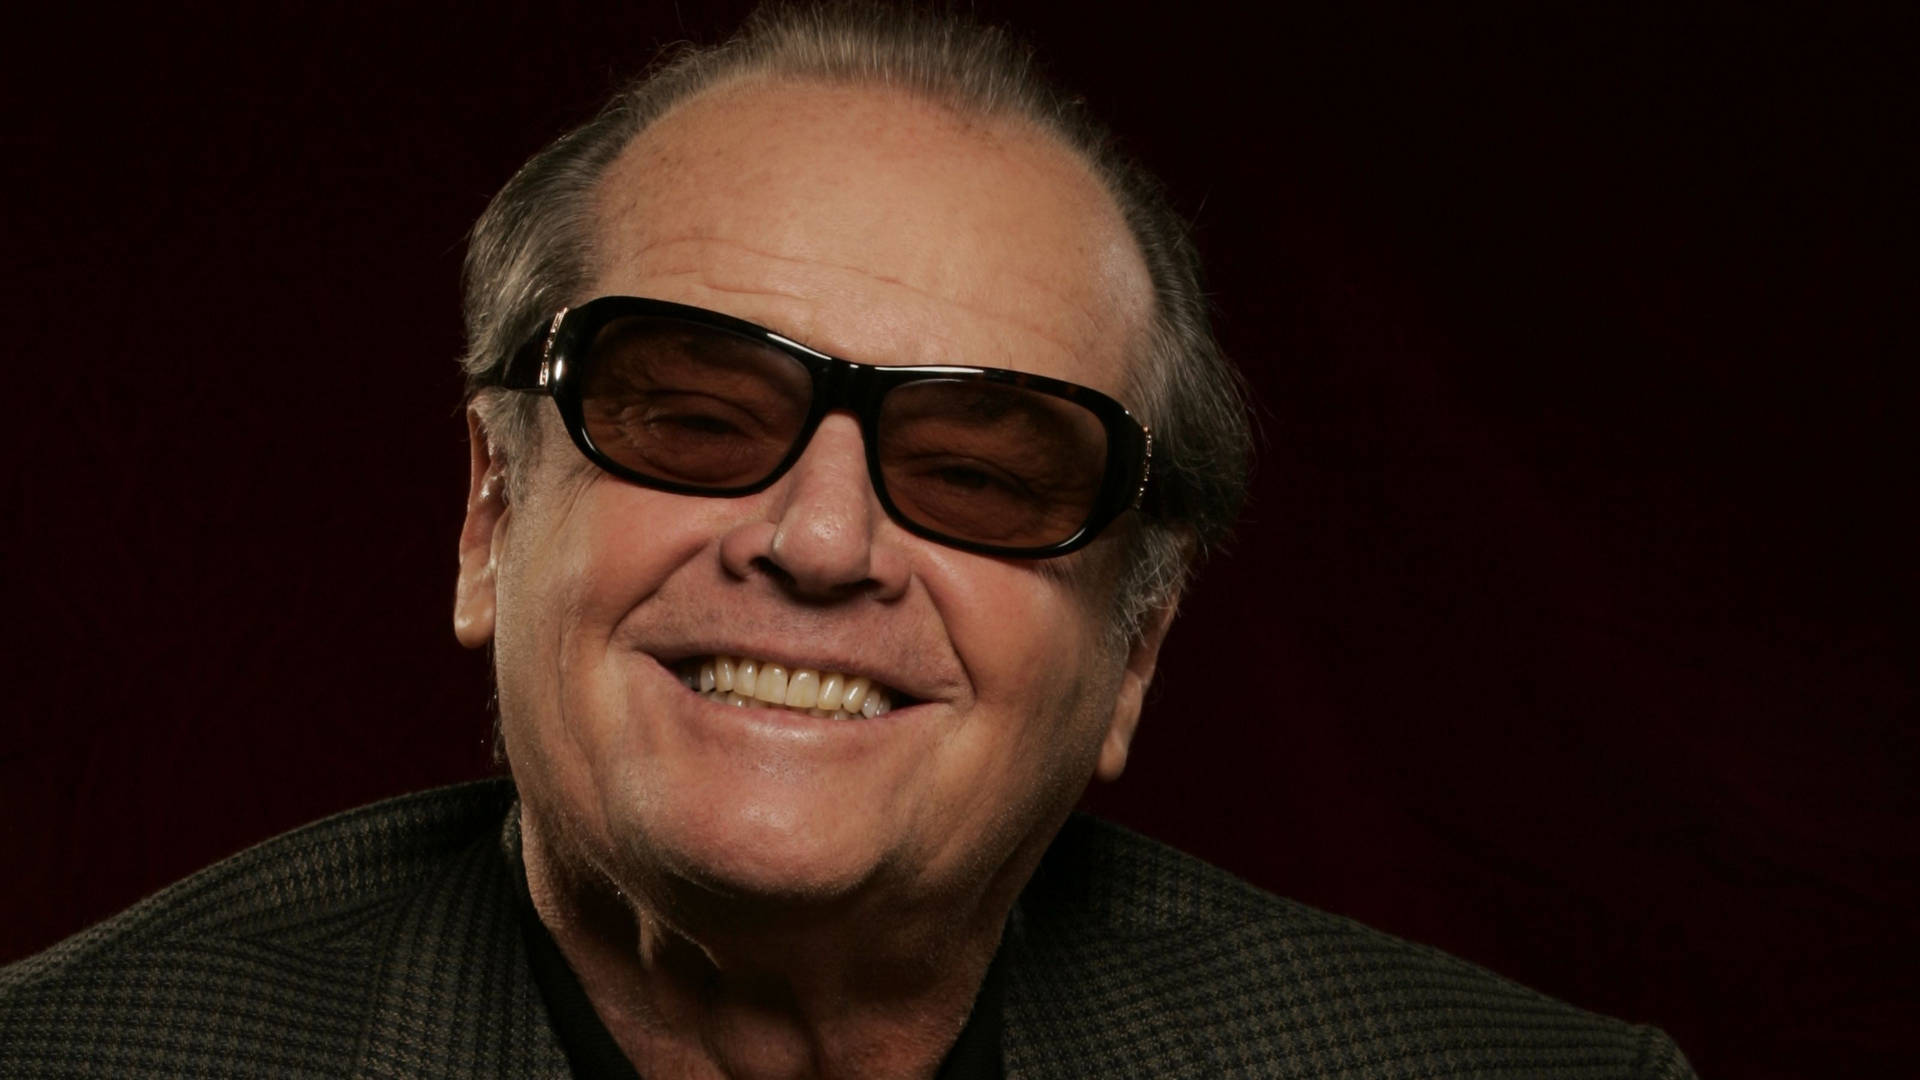 Jack Nicholson Sunglass Portrait Background